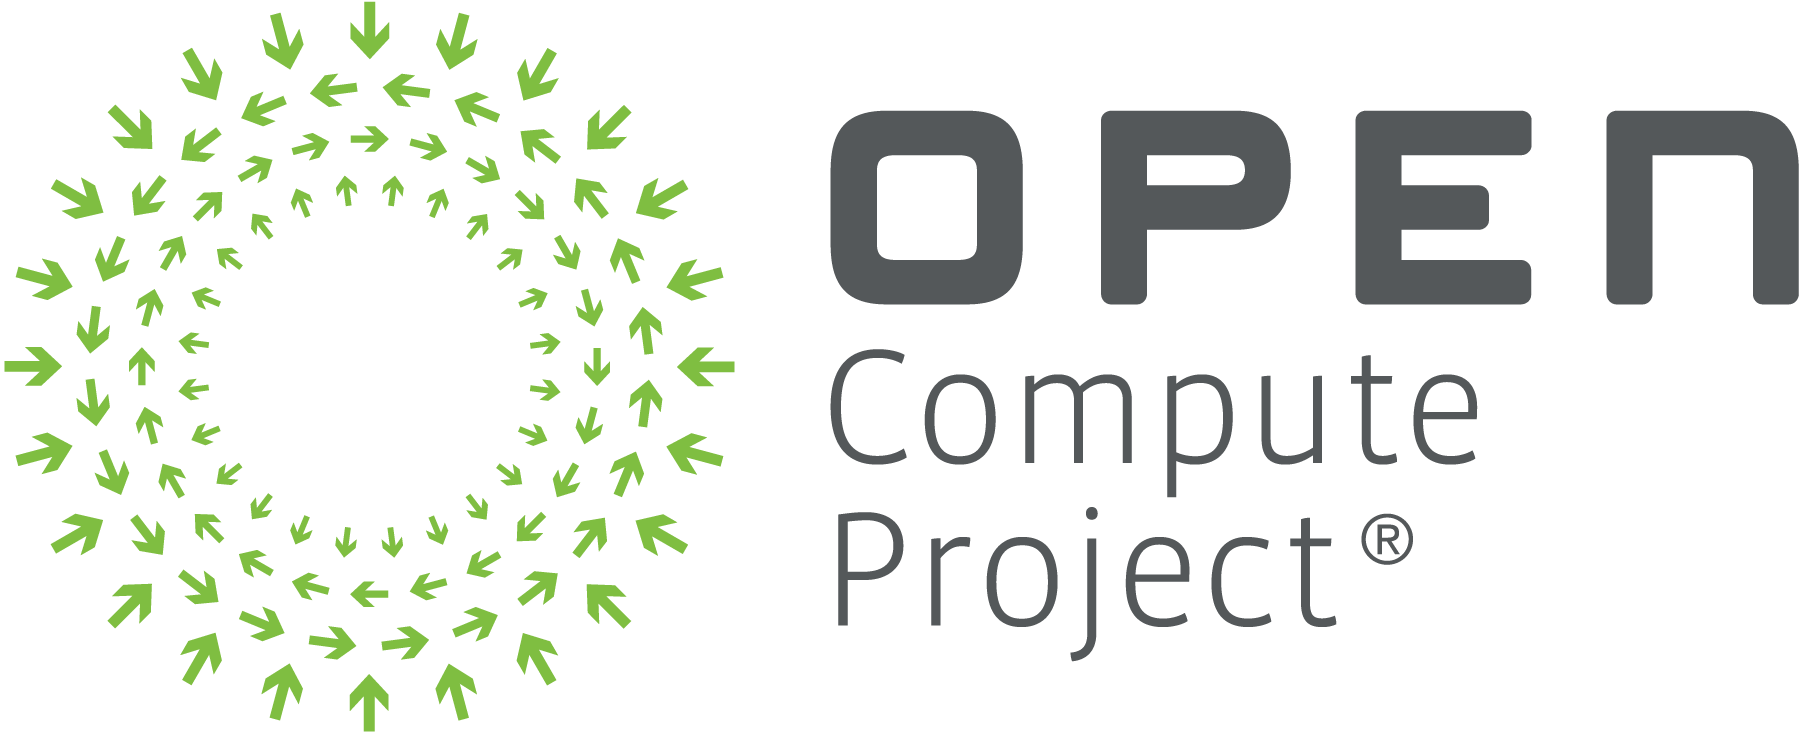 OCP - Open Compute Project